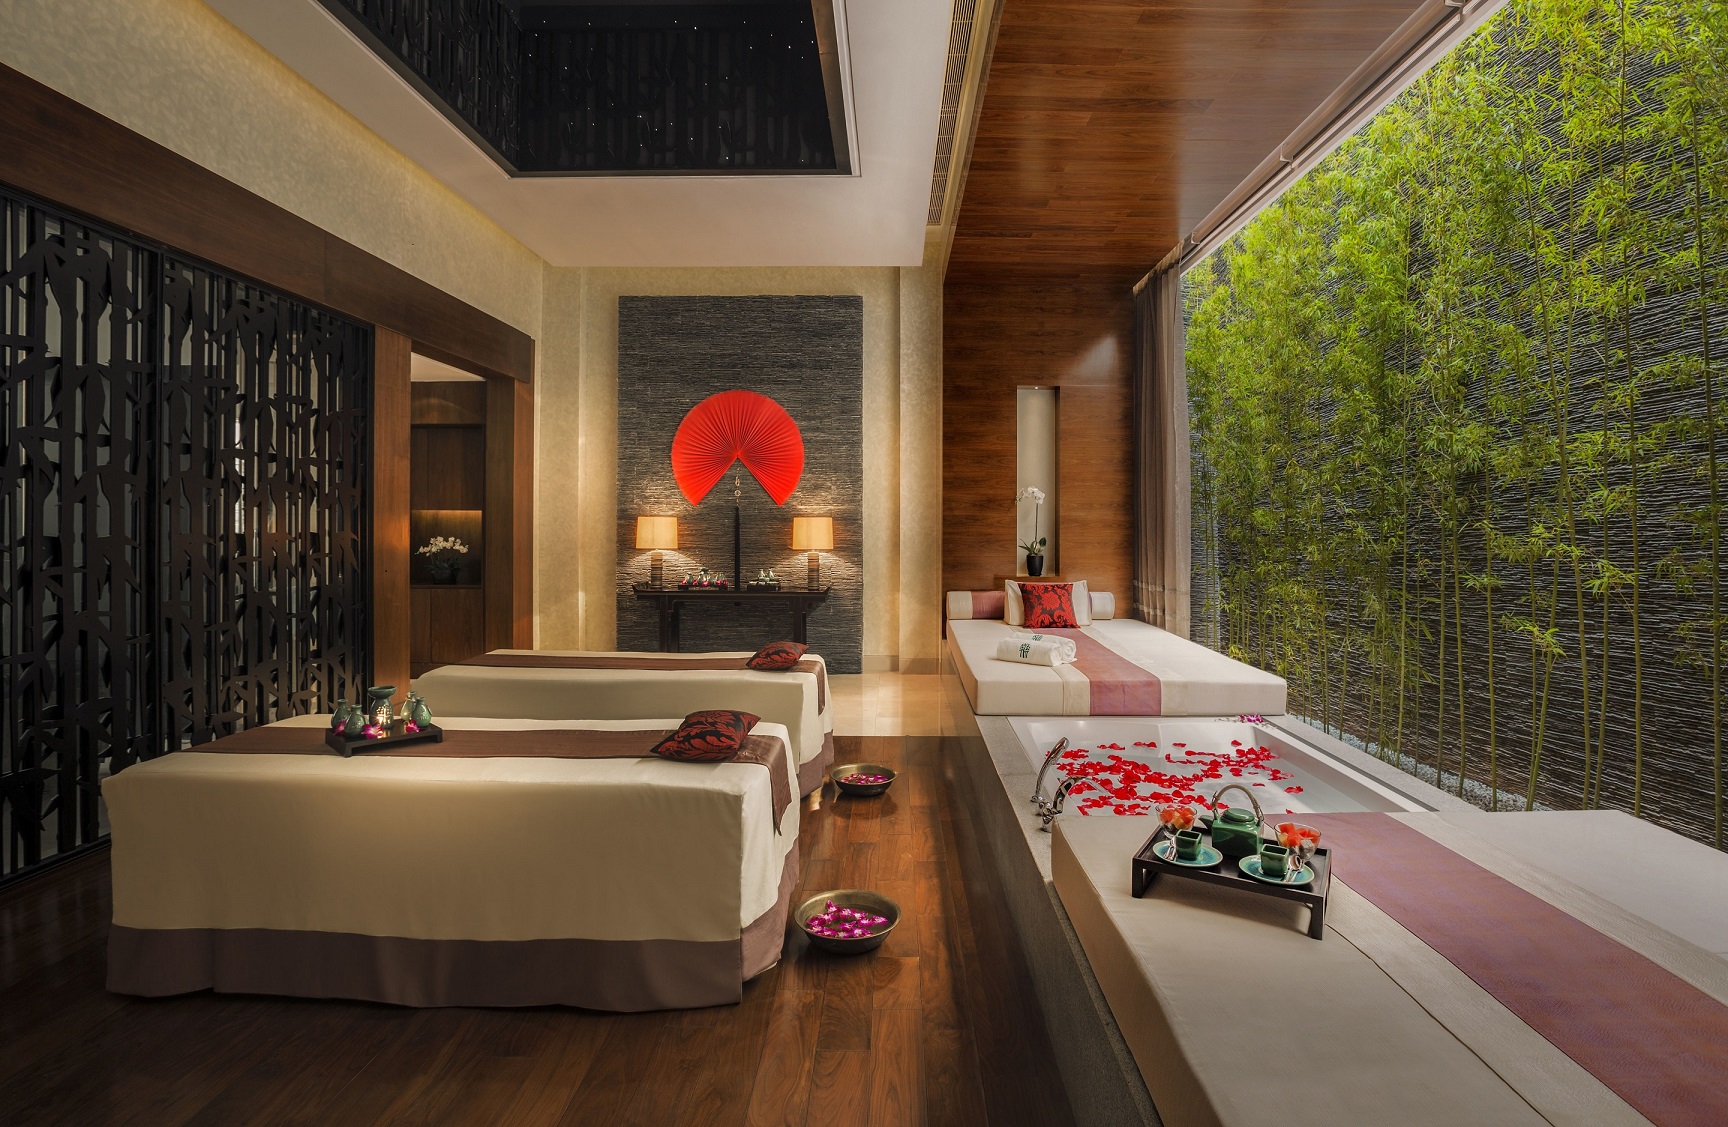 Banyan Tree Spa Macau recognized as the ‘Best Hotel Spa’ at the Vogue Hong Kong Beauty Awards.